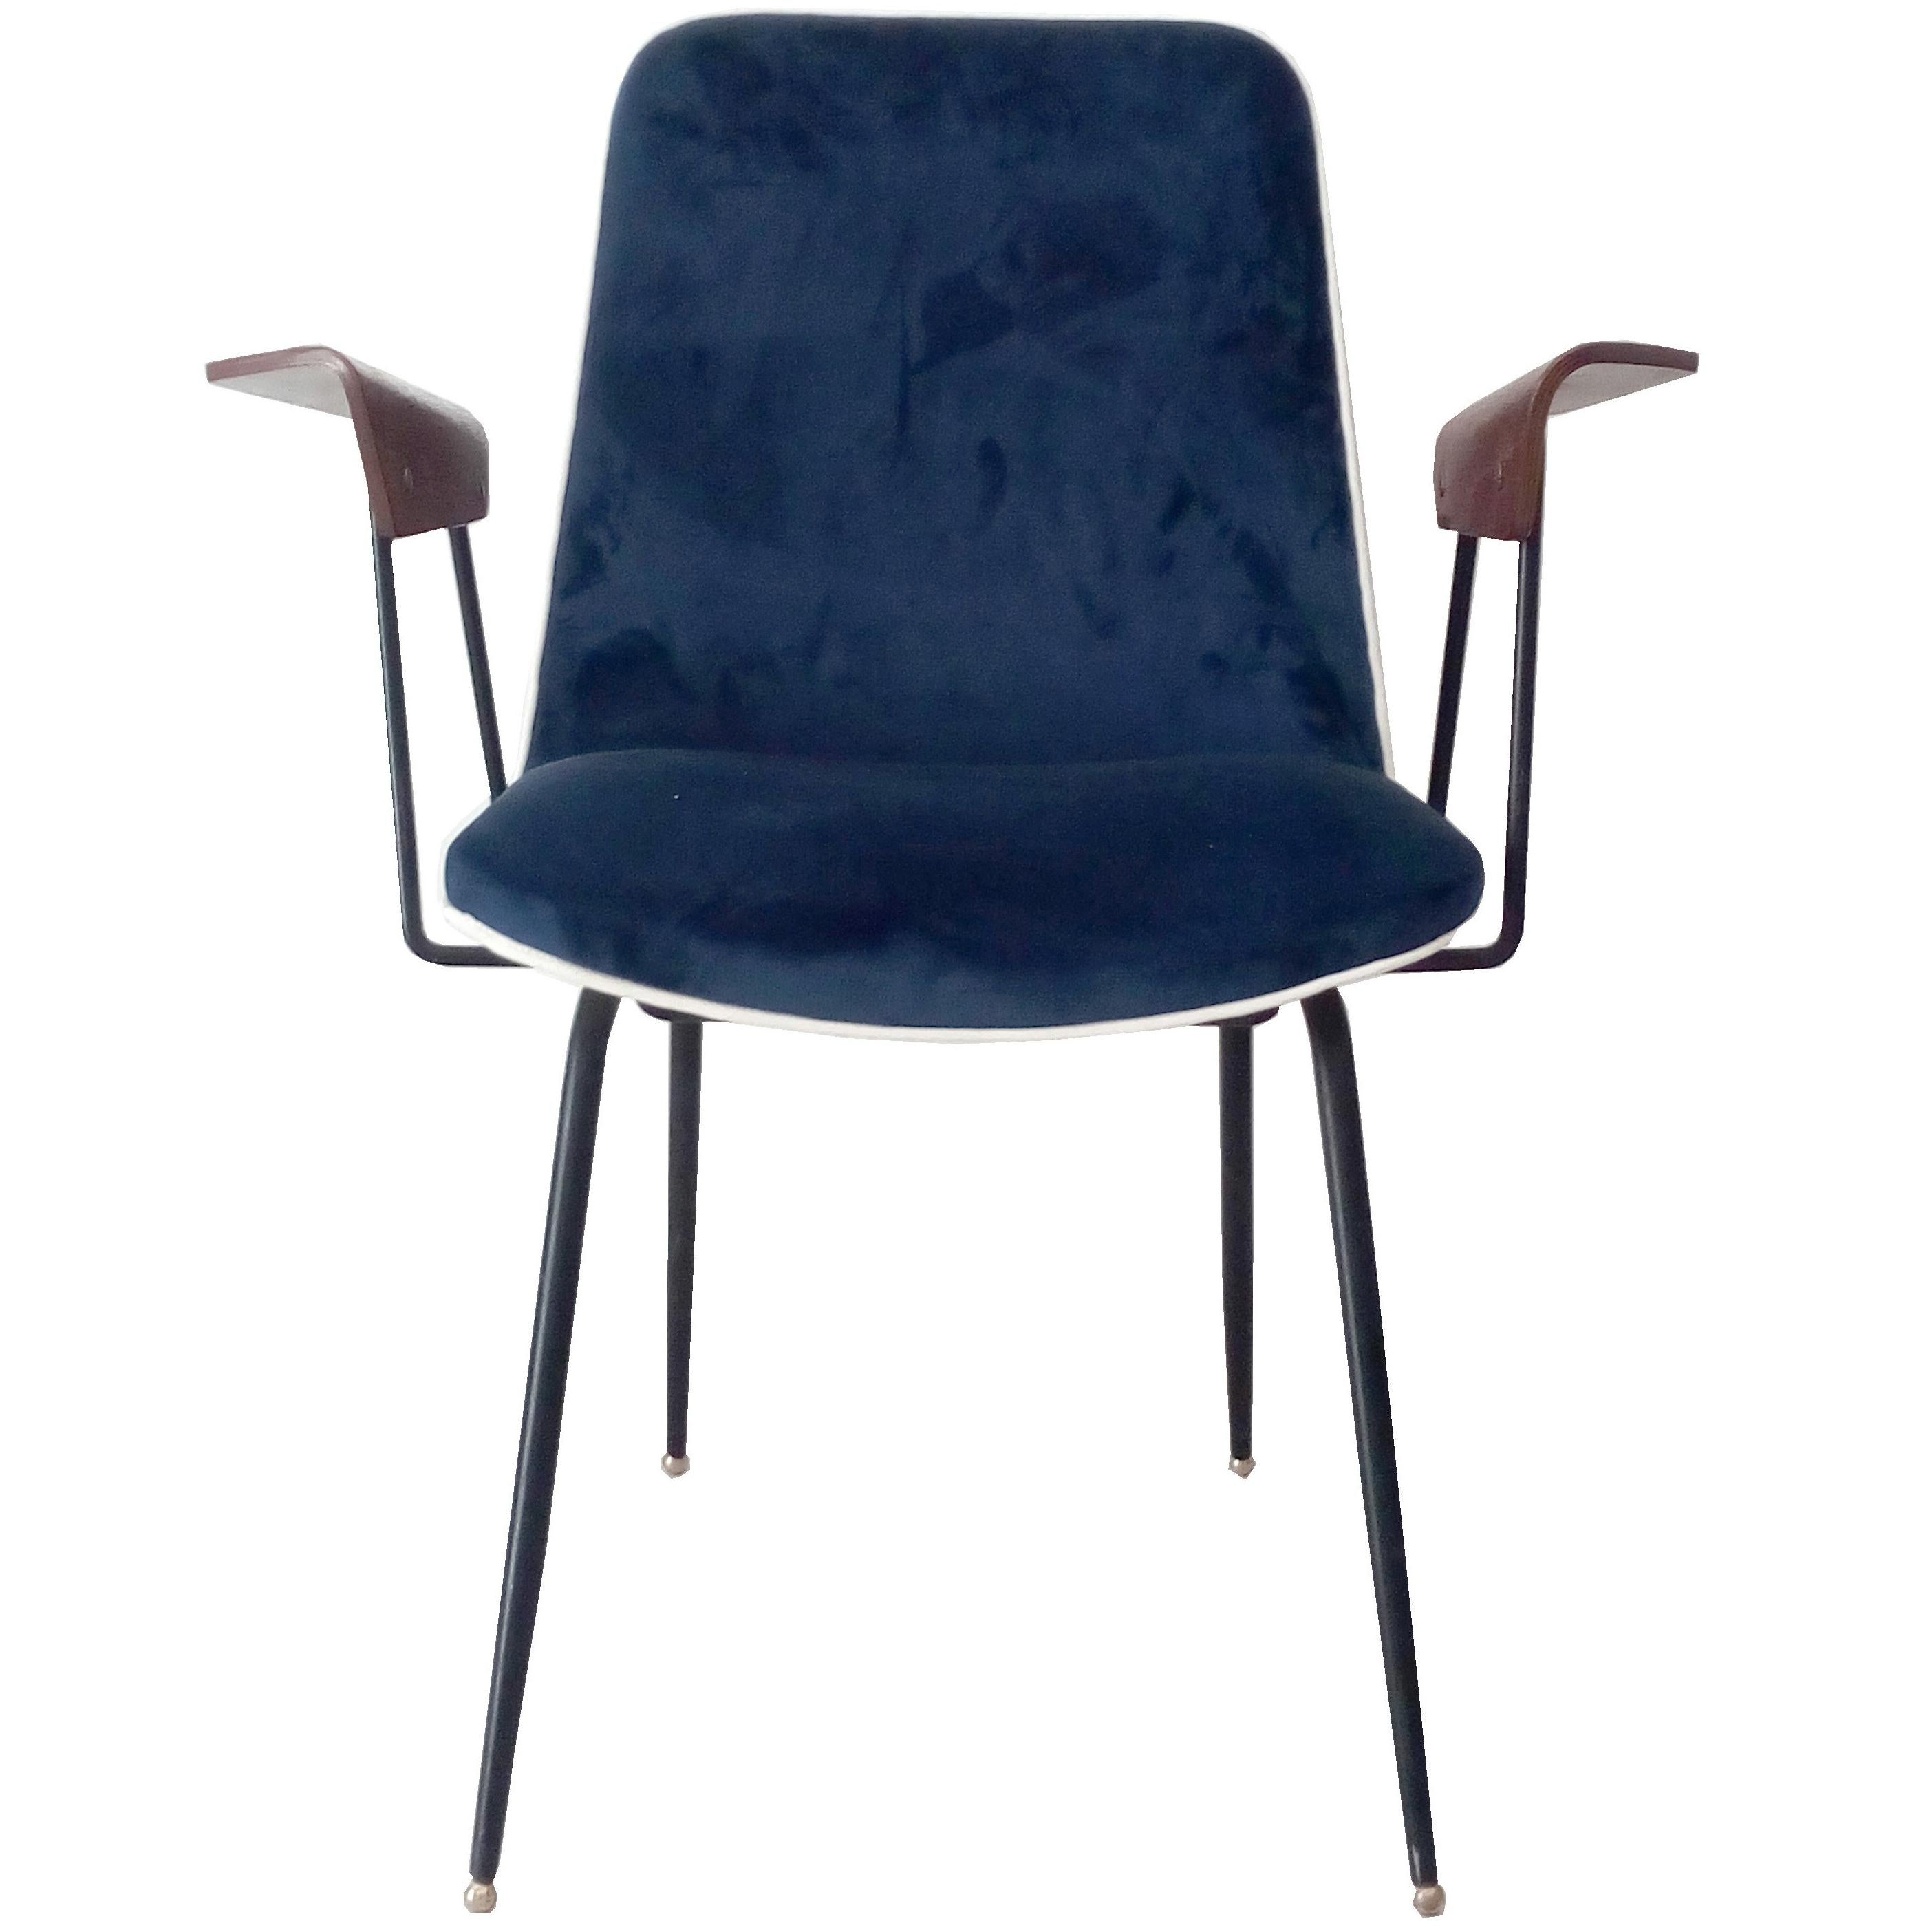 Gastone Rinaldi Blue Fabric Plywood Italian Midcentury Chair "DU22" for RIMA